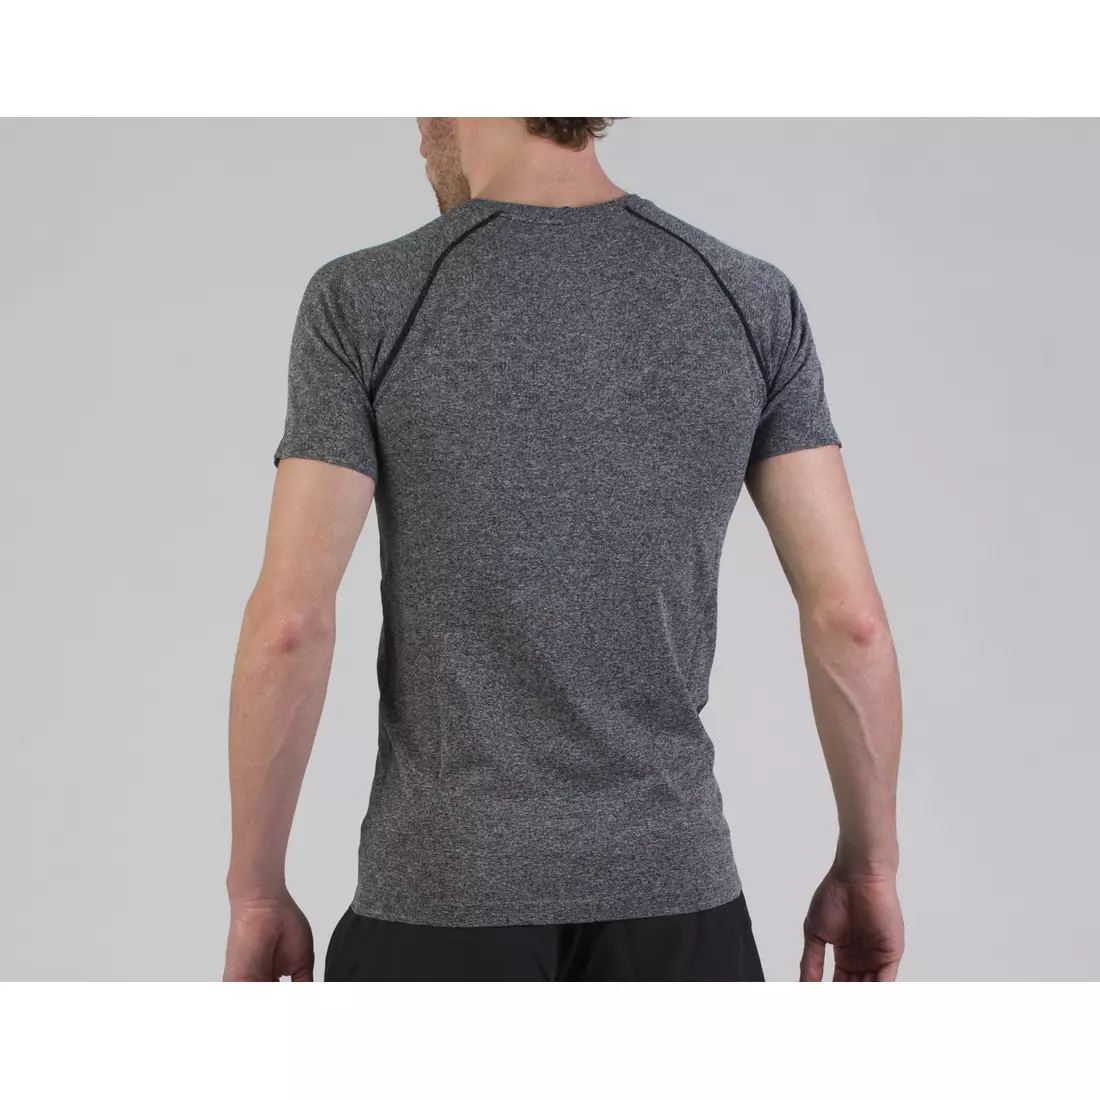 ROGELLI RUN SEAMLESS Seamless men's running T-shirt 800.270 - gray (melange) 